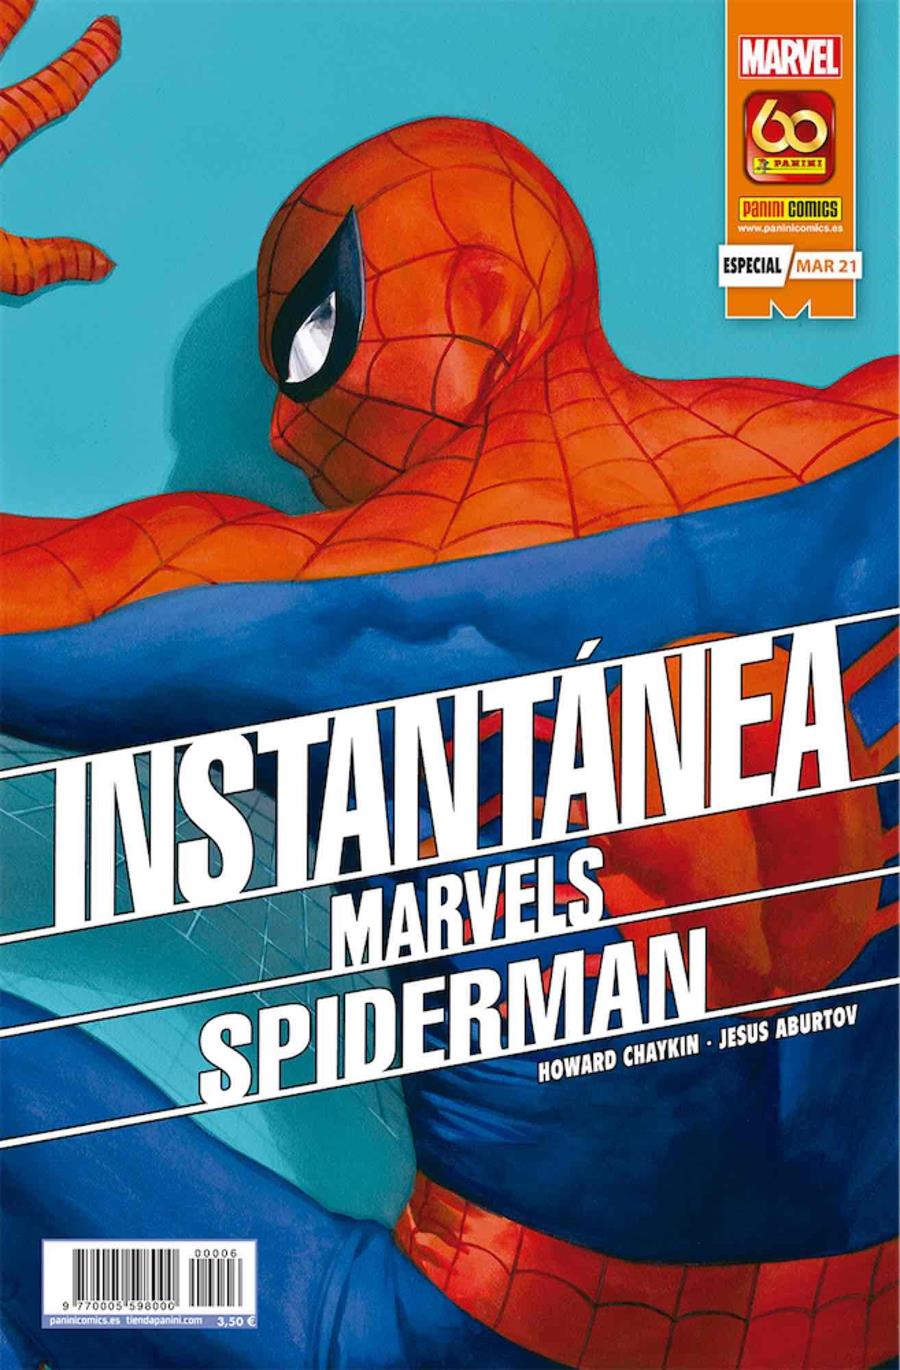 Instantánea Marvels: Spiderman | N0321-PAN20 | Howard Chaykin | Terra de Còmic - Tu tienda de cómics online especializada en cómics, manga y merchandising